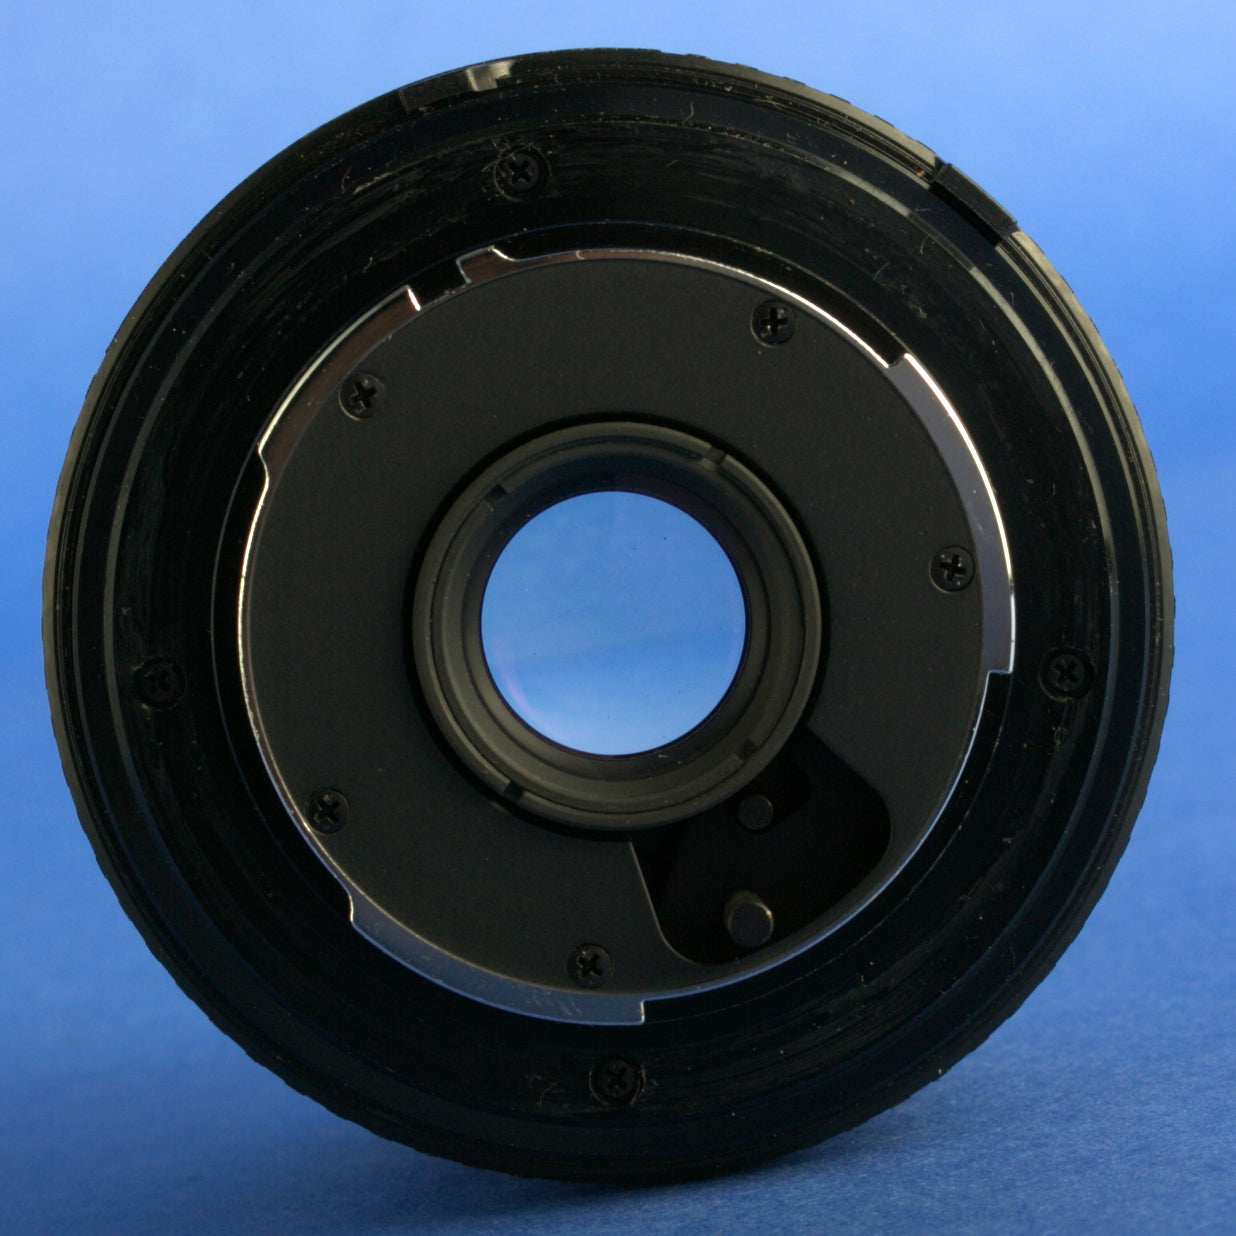 Minolta MD 28mm 2.8 Lens Near Mint Condition